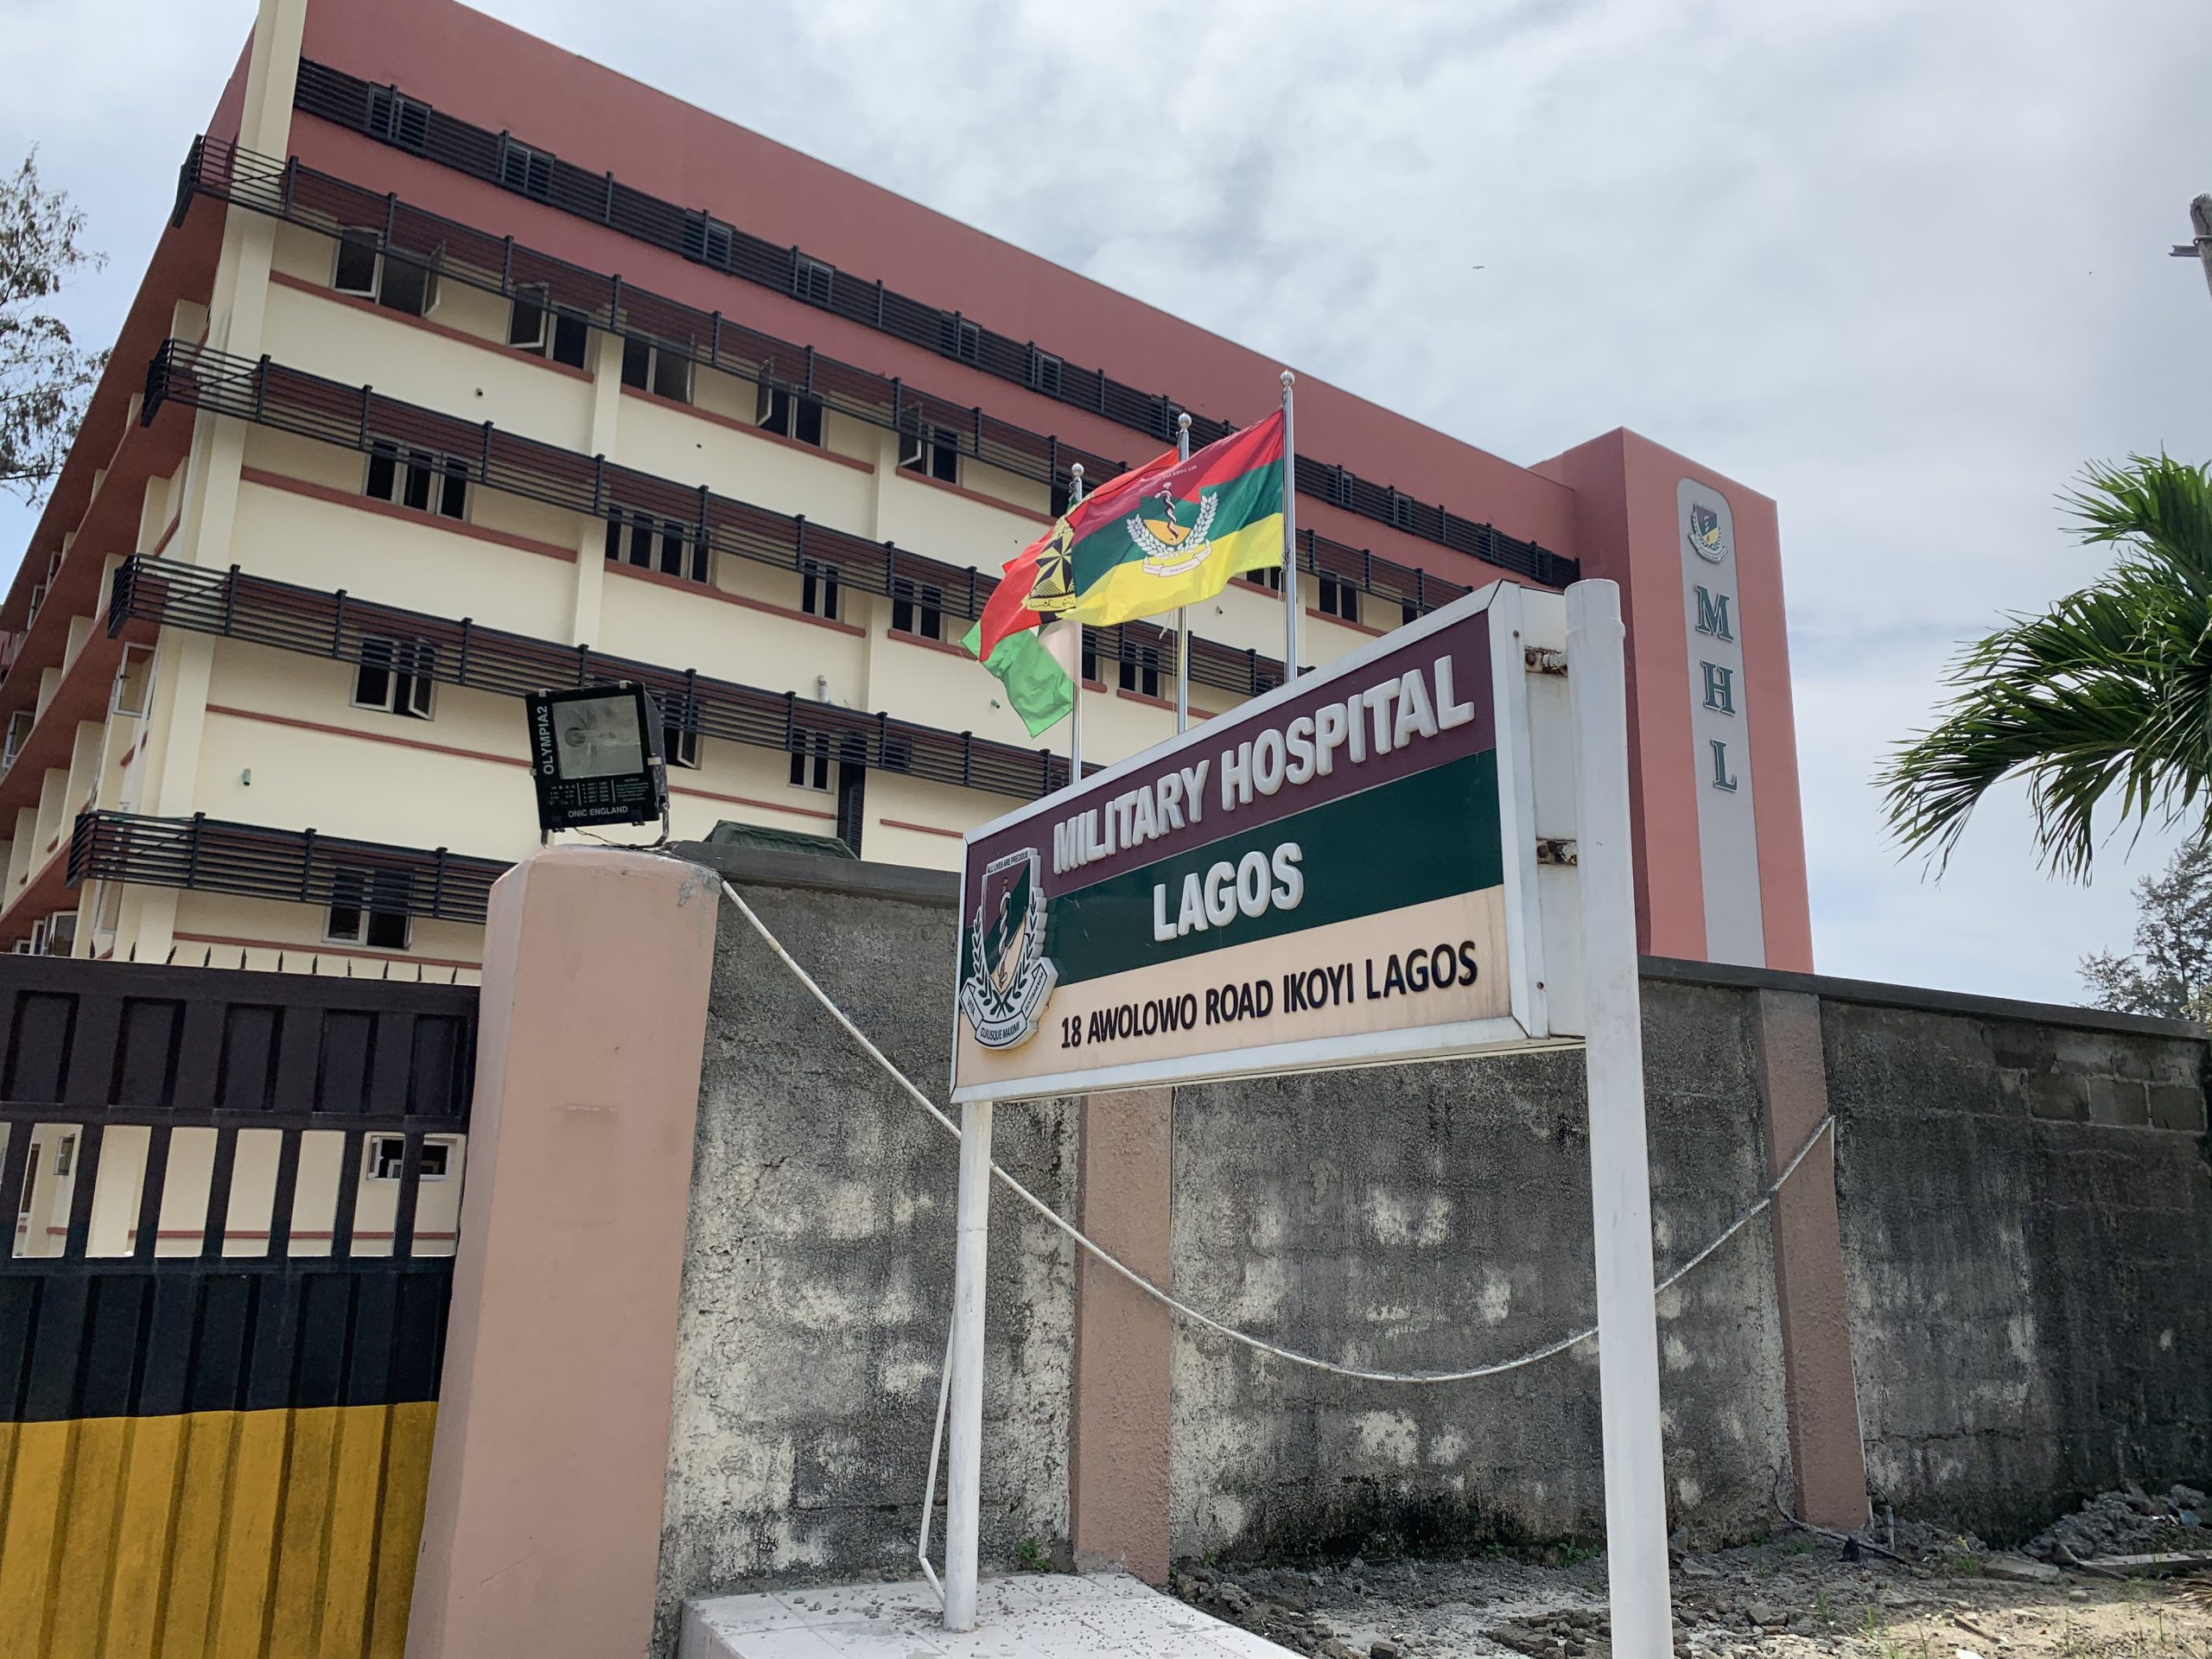 Lagos Military Hospital, Ikoyi